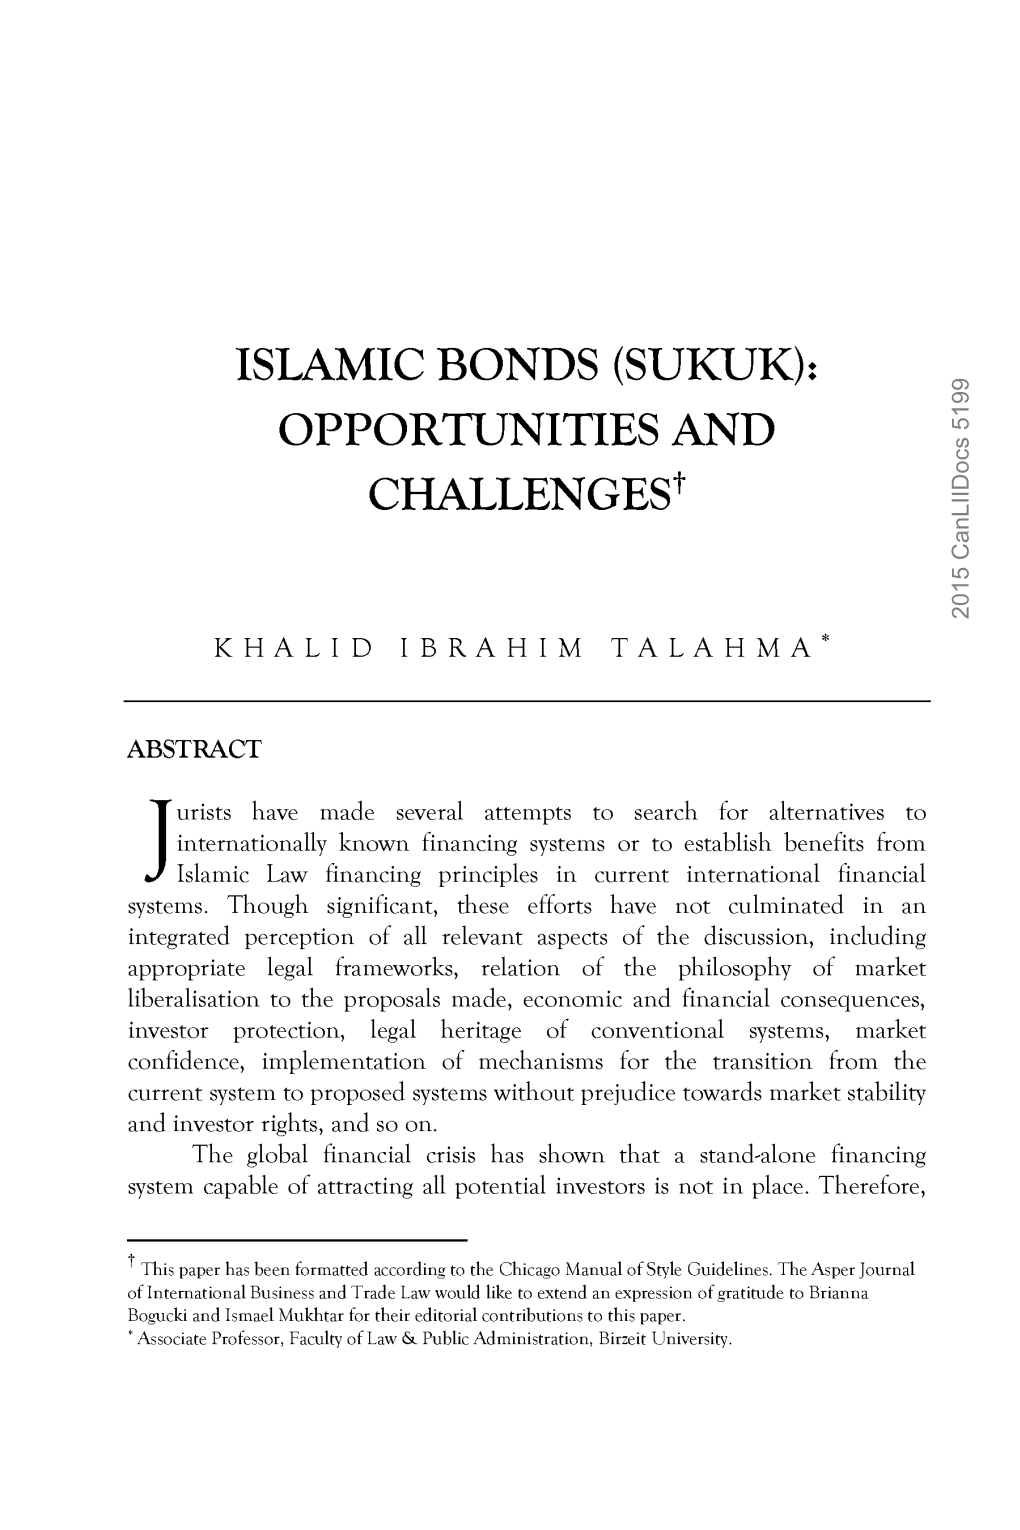 ISLAMIC BONDS (SUKUK): OPPORTUNITIES and CHALLENGES' 2015 Canliidocs 5199 KHALID IBRAHIM TALAHMA*